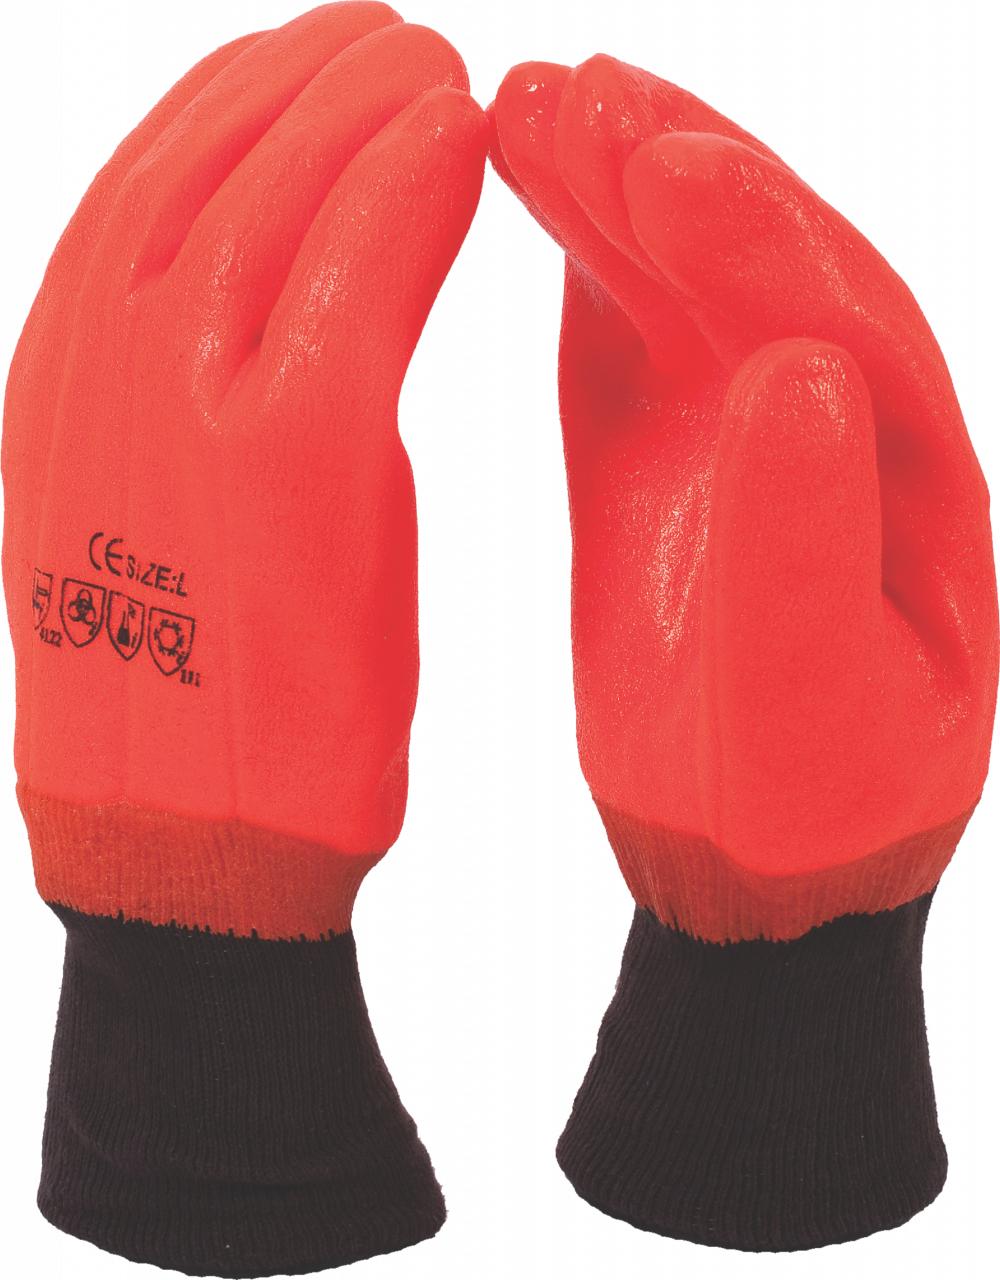 Glove Freezer Pvc Knit Wrist